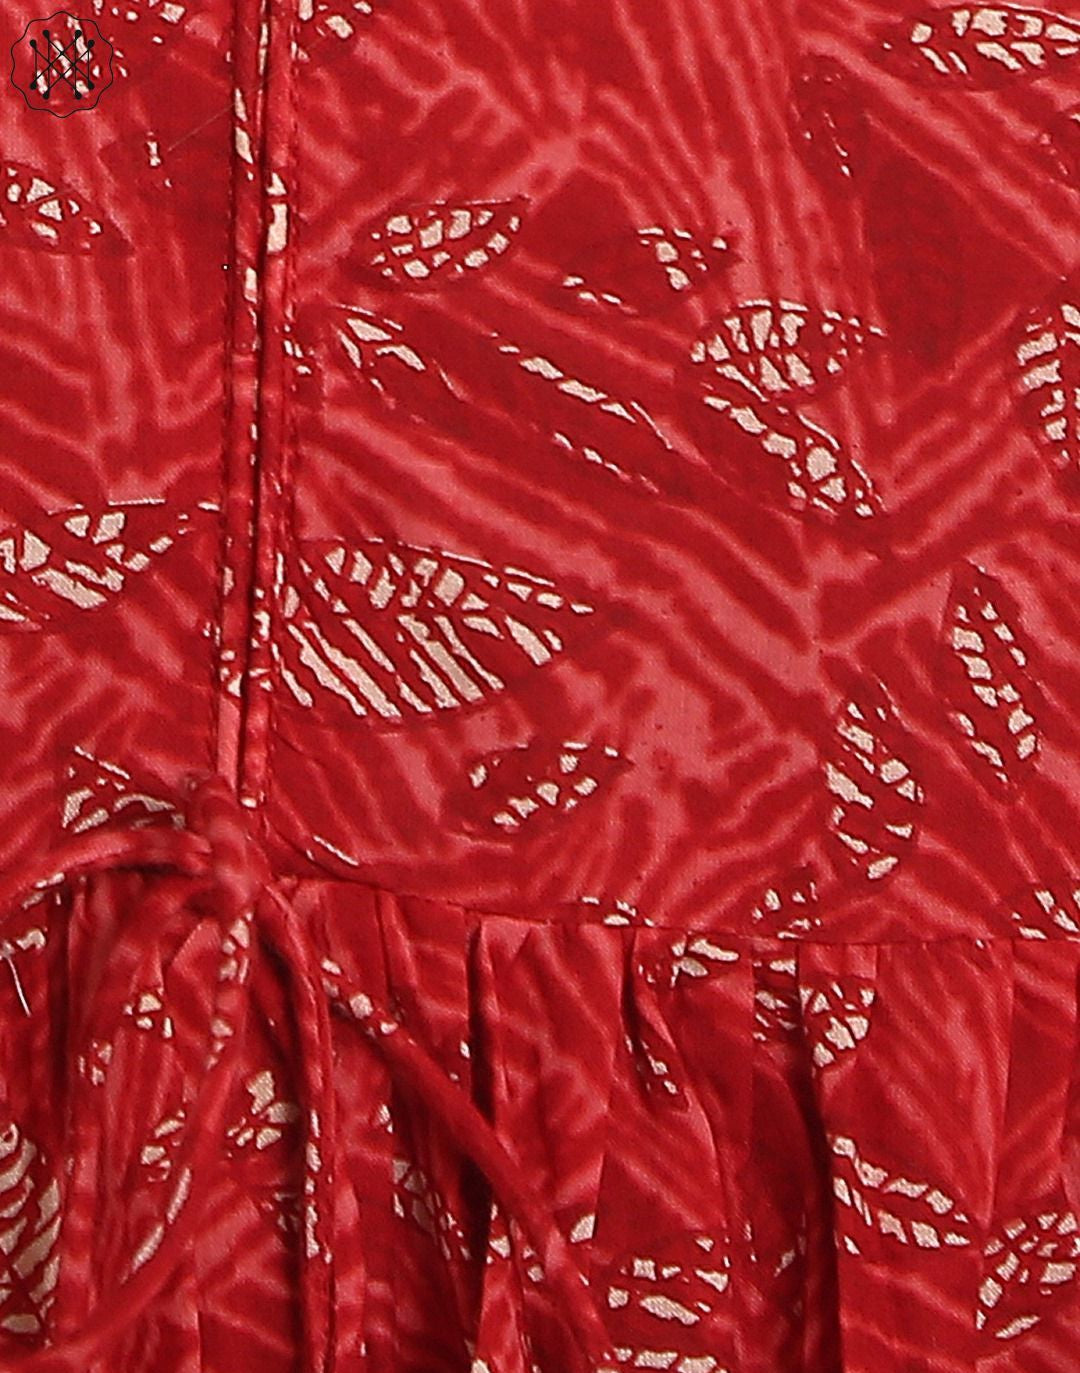 Red Printed 3/4 Sleeve Cotton Anarkali Kurta